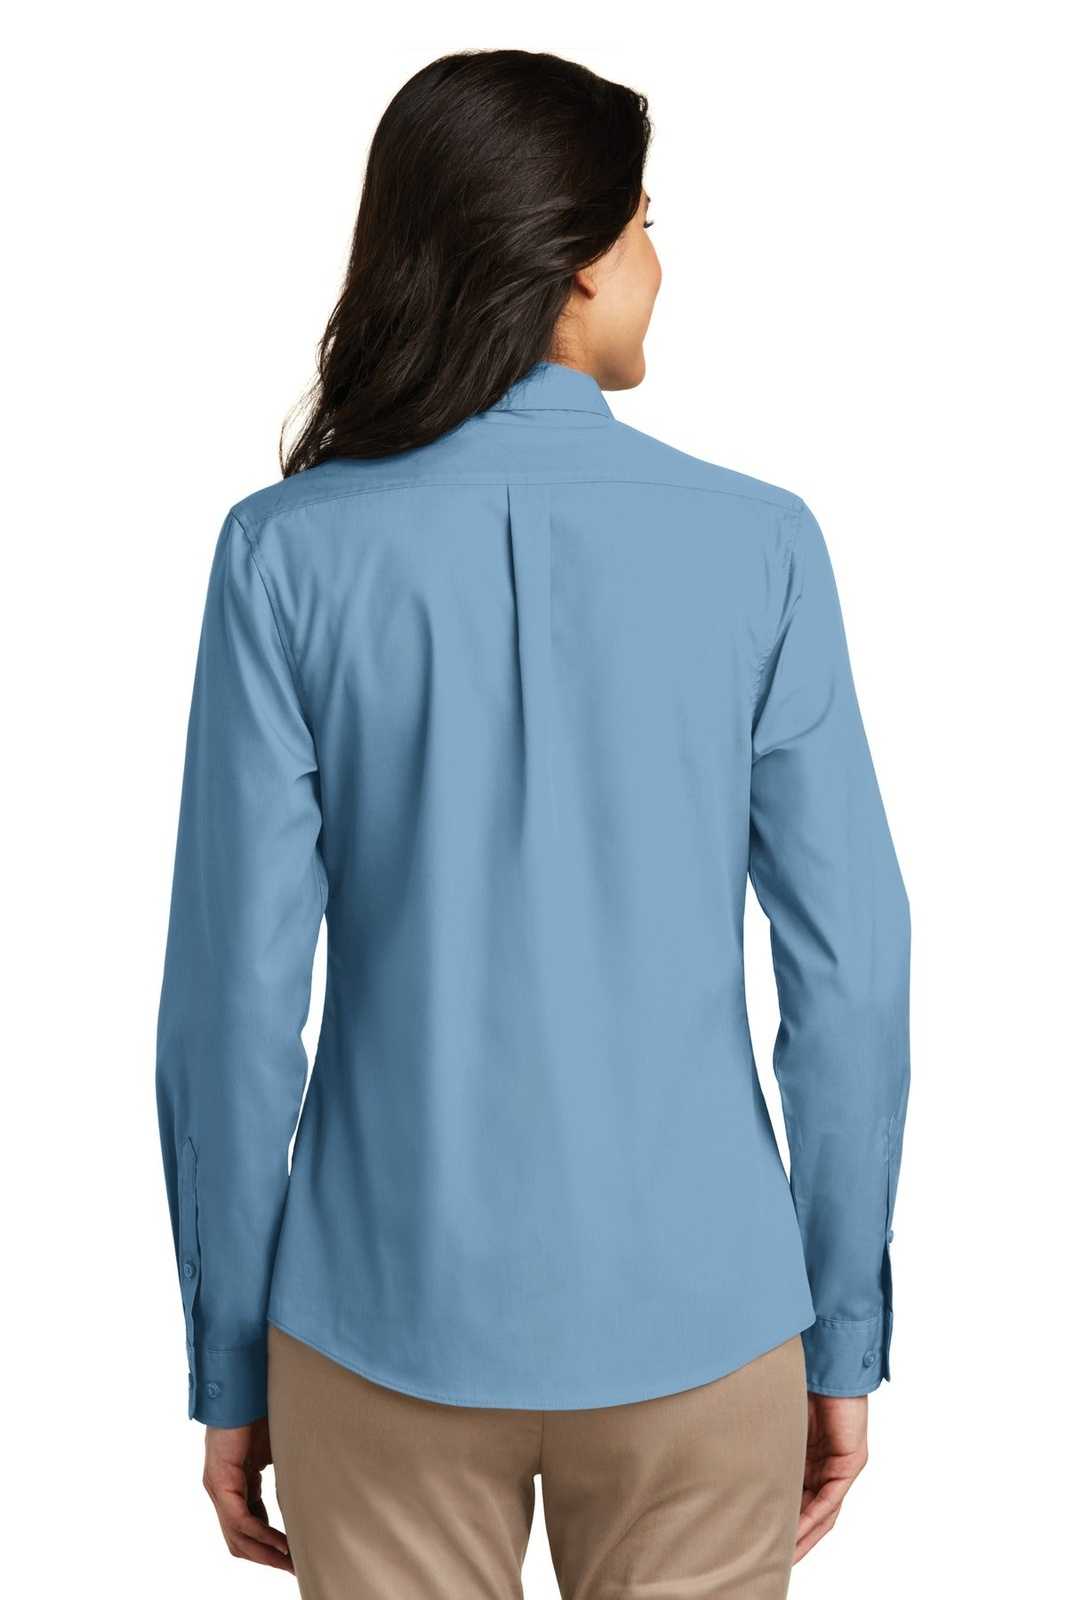 Port Authority LW100 Ladies Long Sleeve Carefree Poplin Shirt - Carolina Blue - HIT a Double - 1